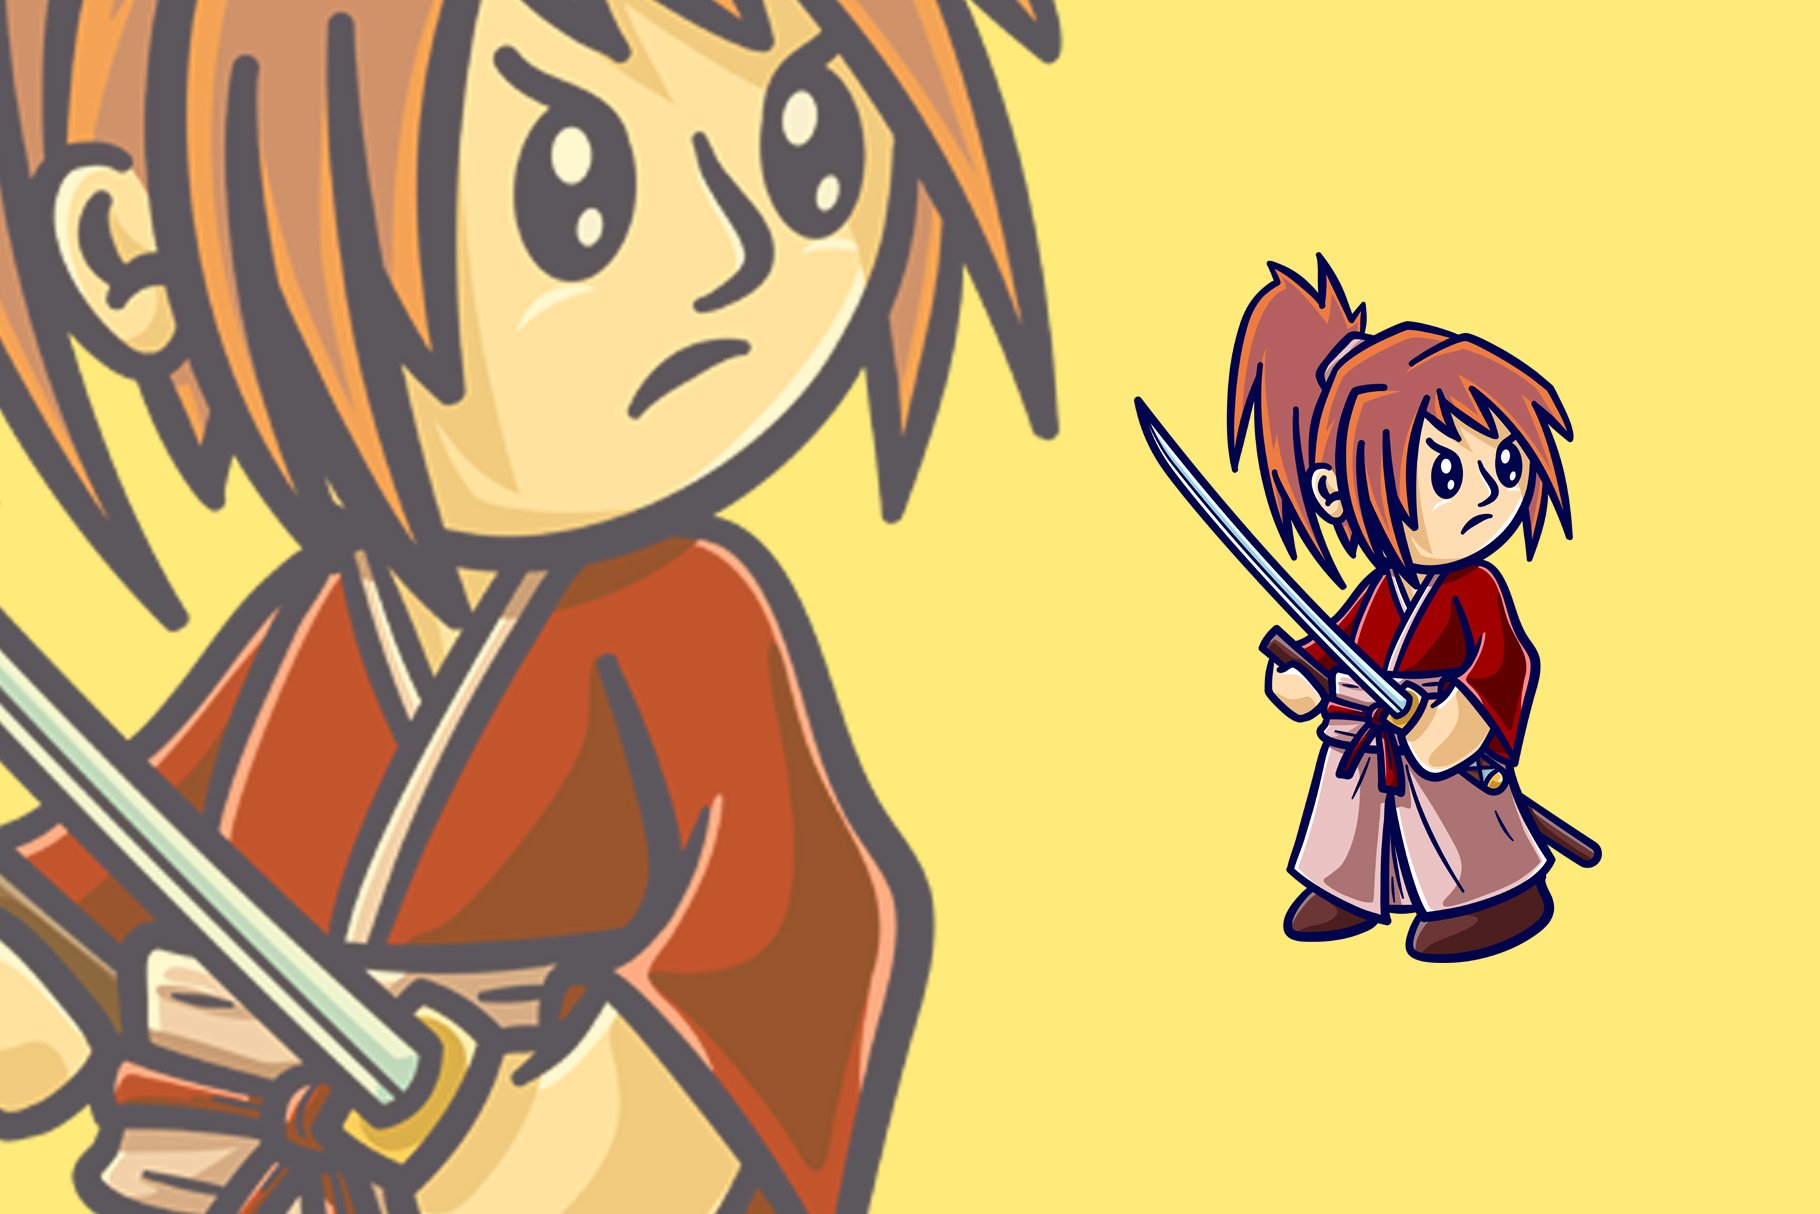 Cute samurai holding sword cartoon cover image.